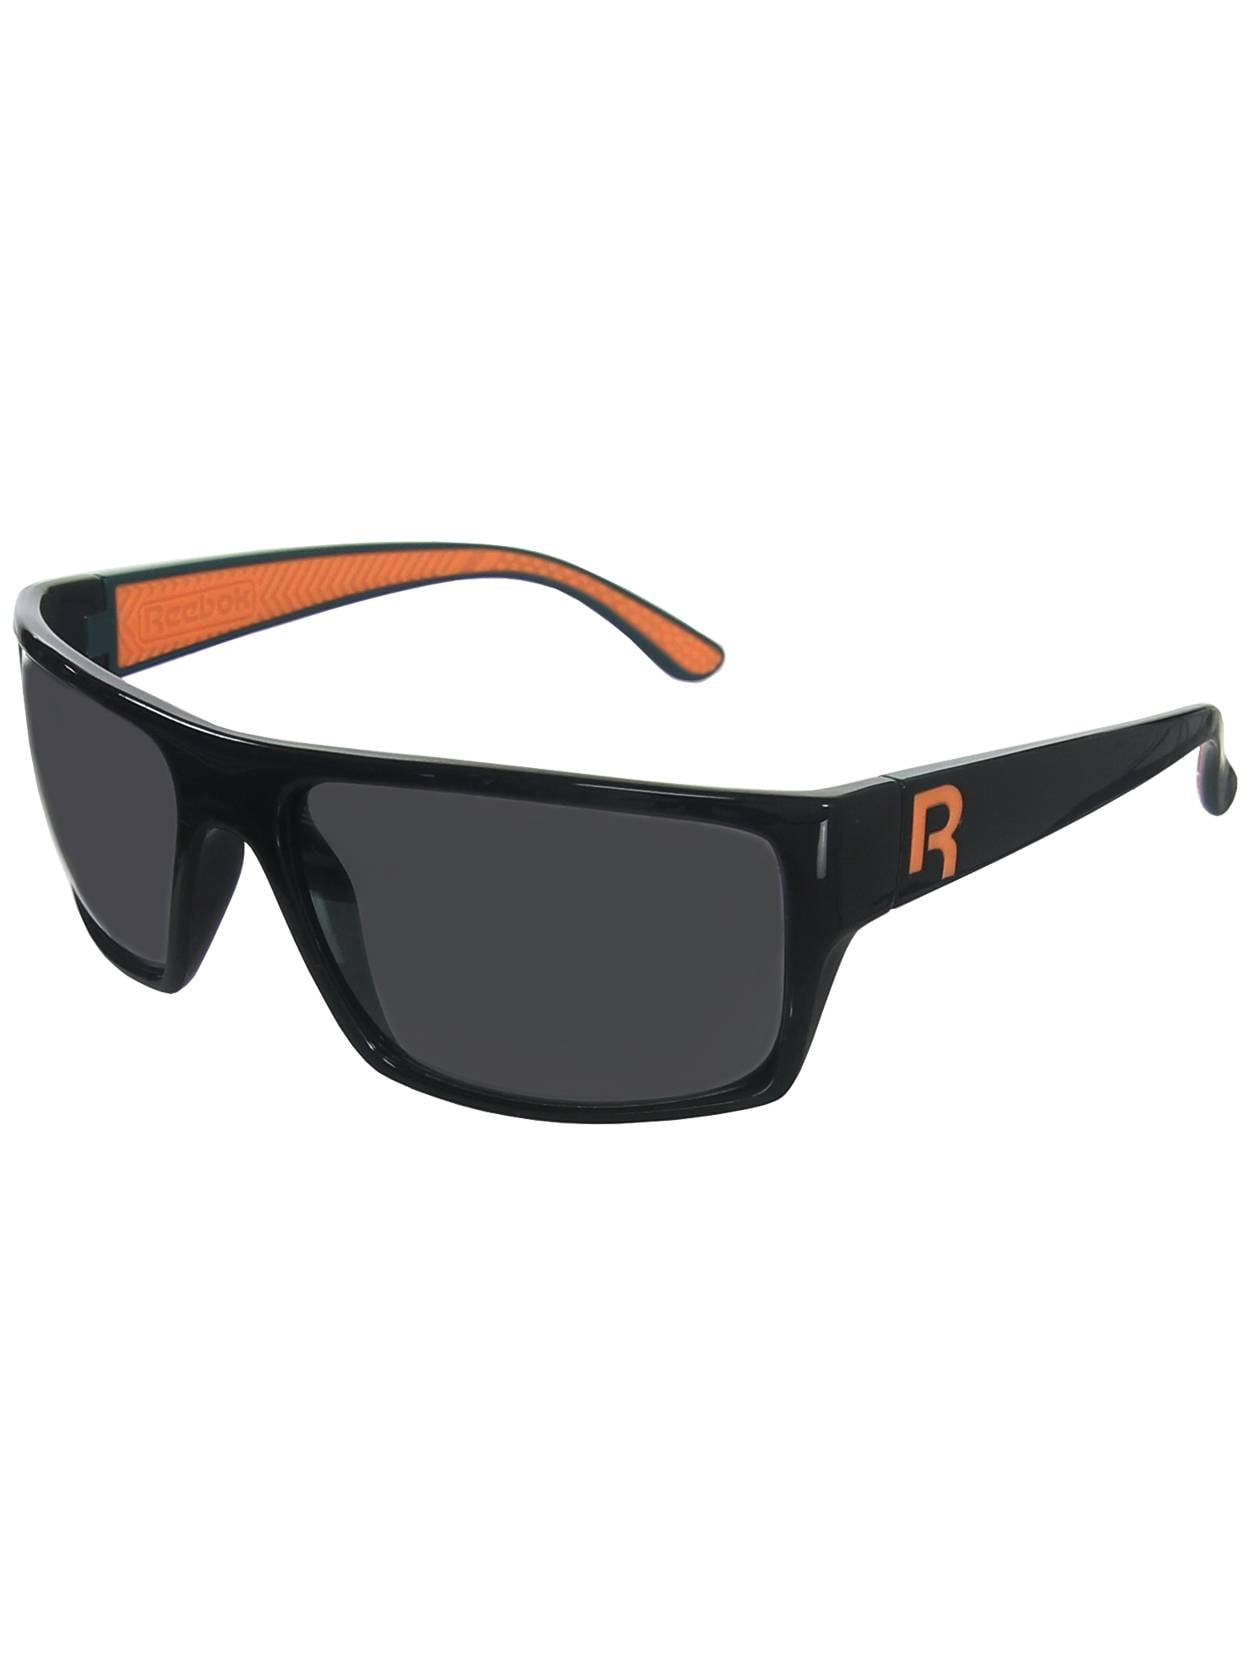 reebok classic sunglasses orange